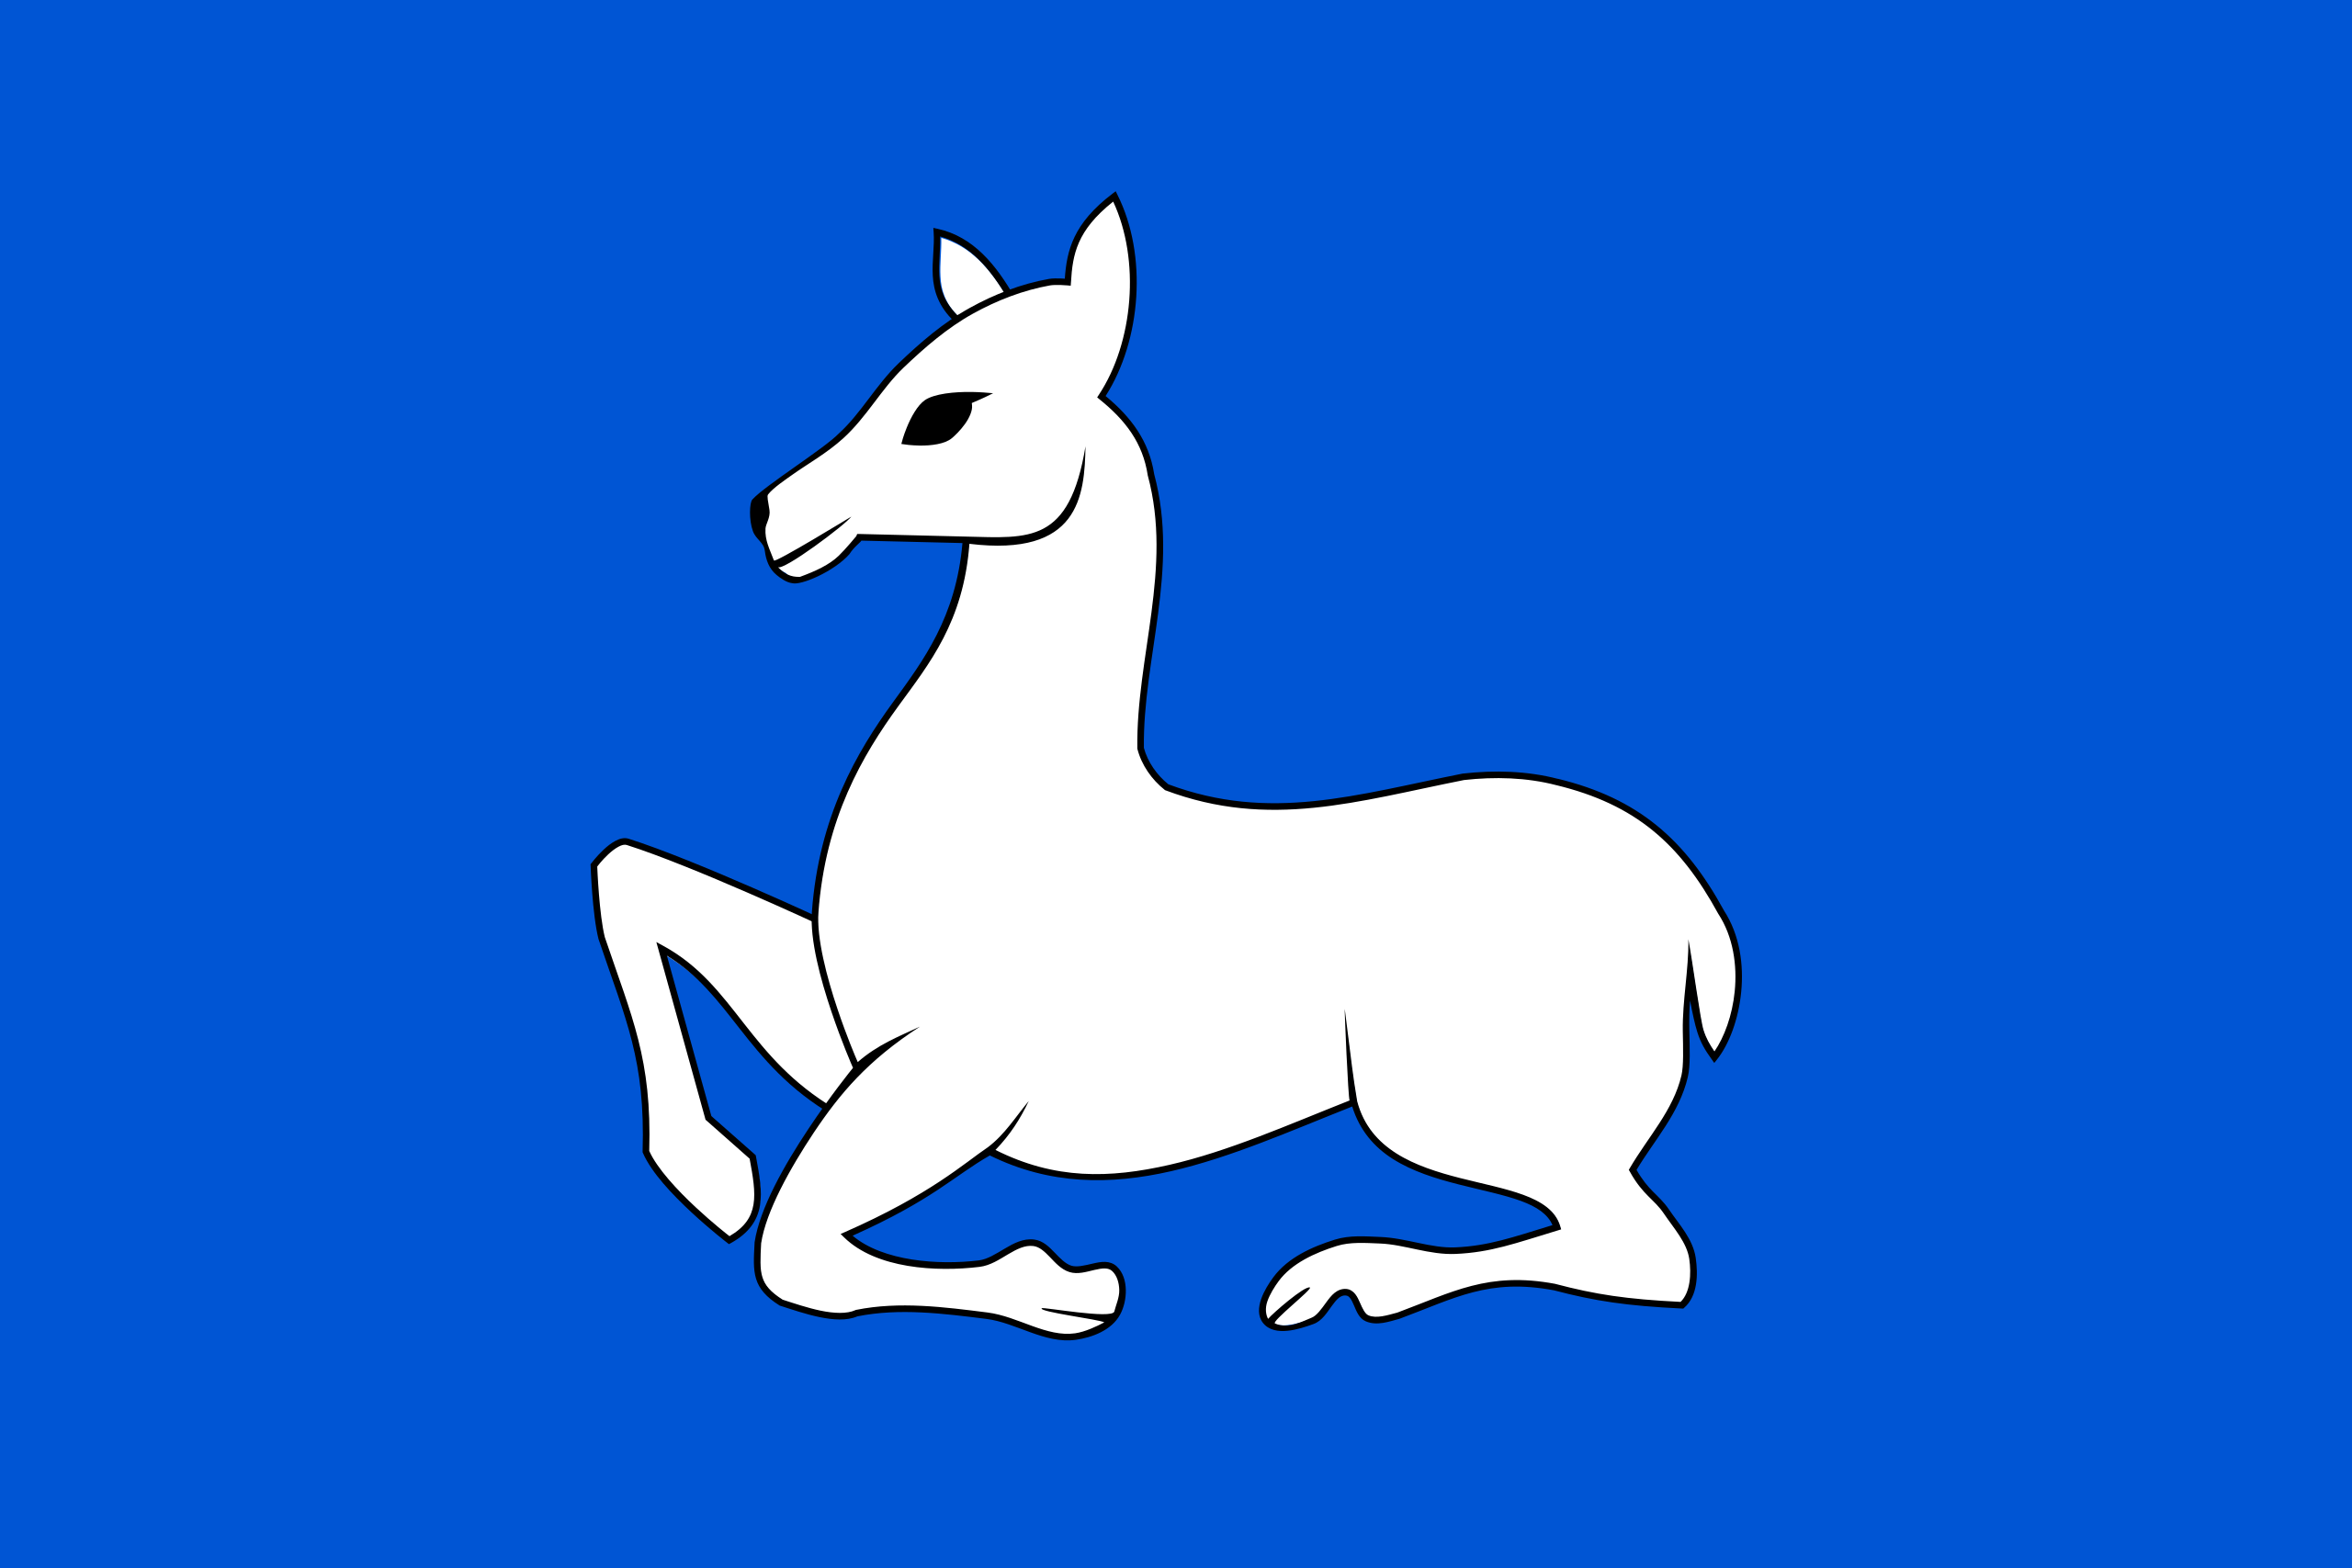 Obrázek vlajky města Rovensko Pod Troskami v rozlišení 2560x1707 Liberecký kraj Rovenská vlajka 